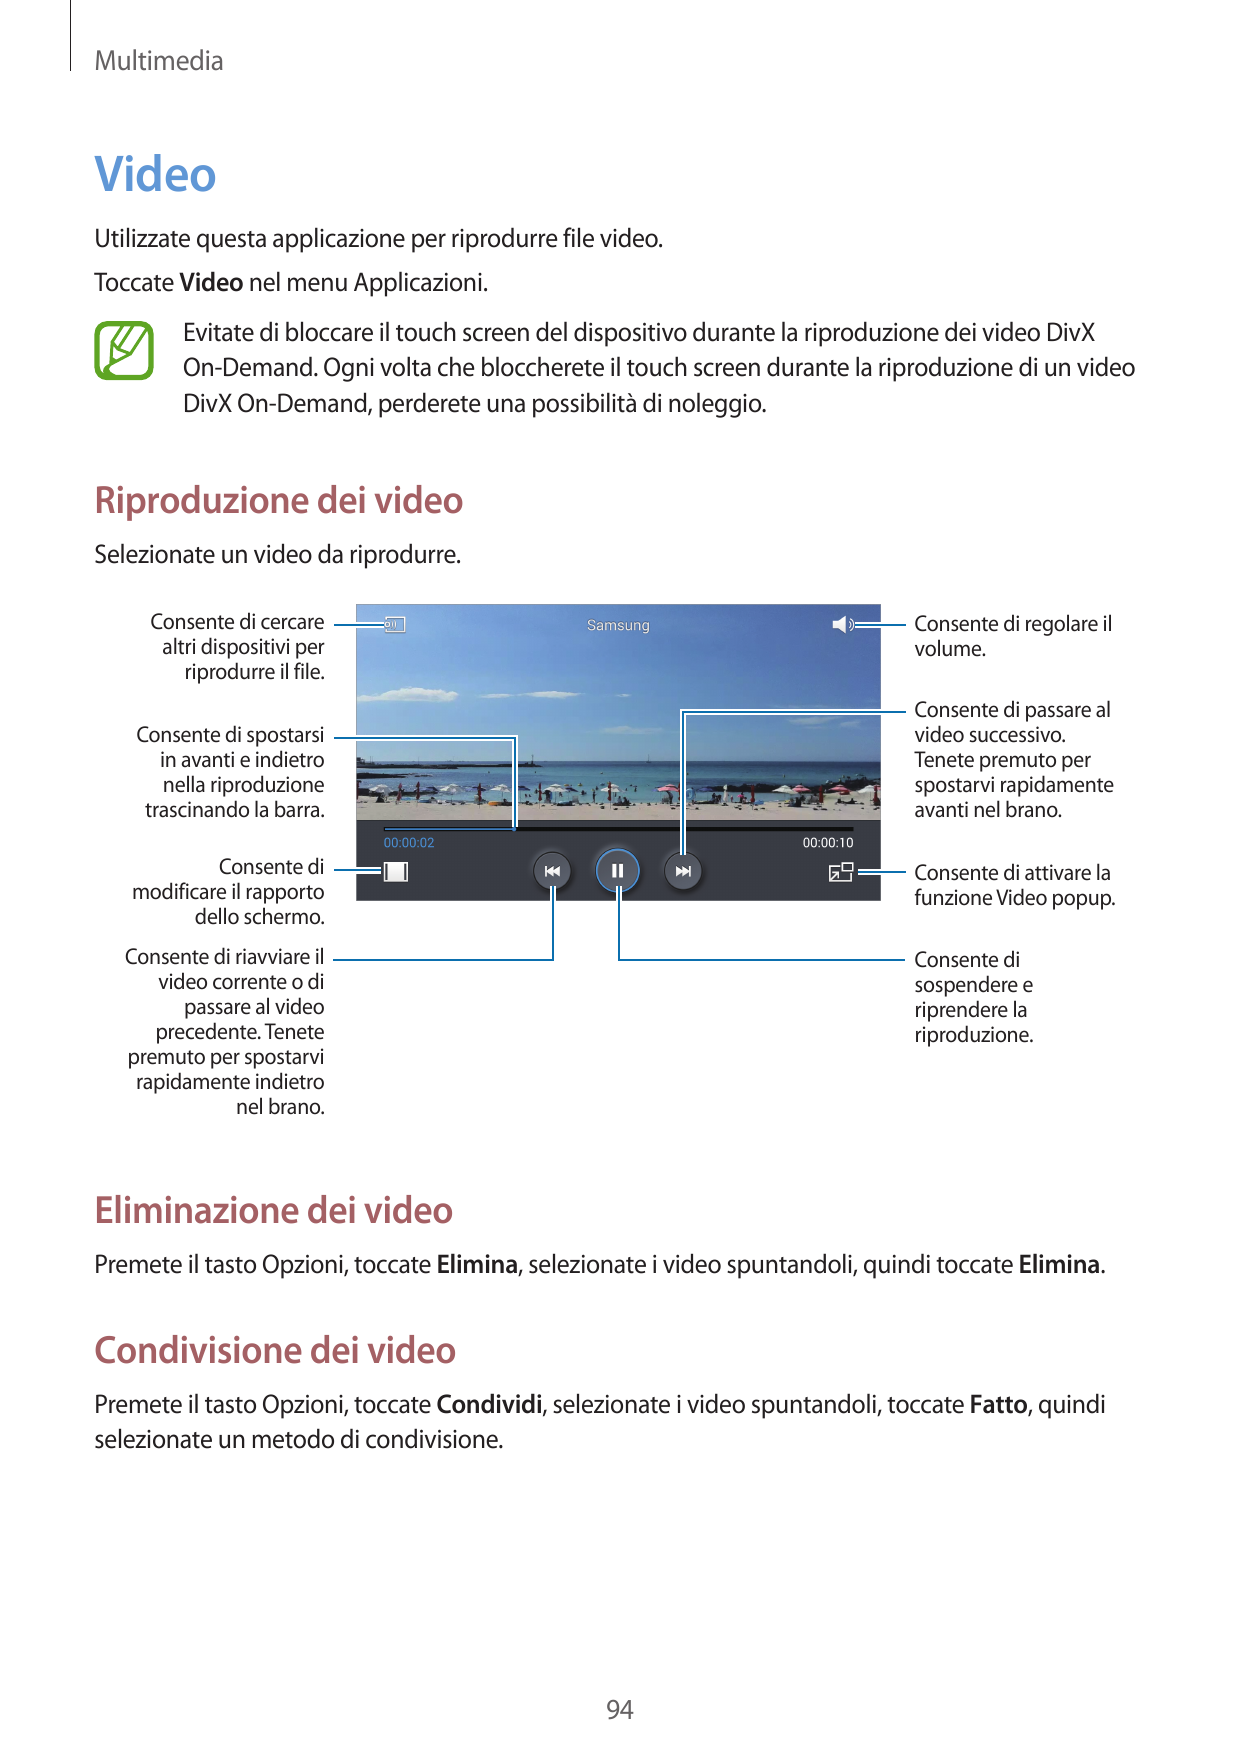 MultimediaVideoUtilizzate questa applicazione per riprodurre file video.Toccate Video nel menu Applicazioni.Evitate di bloccare 